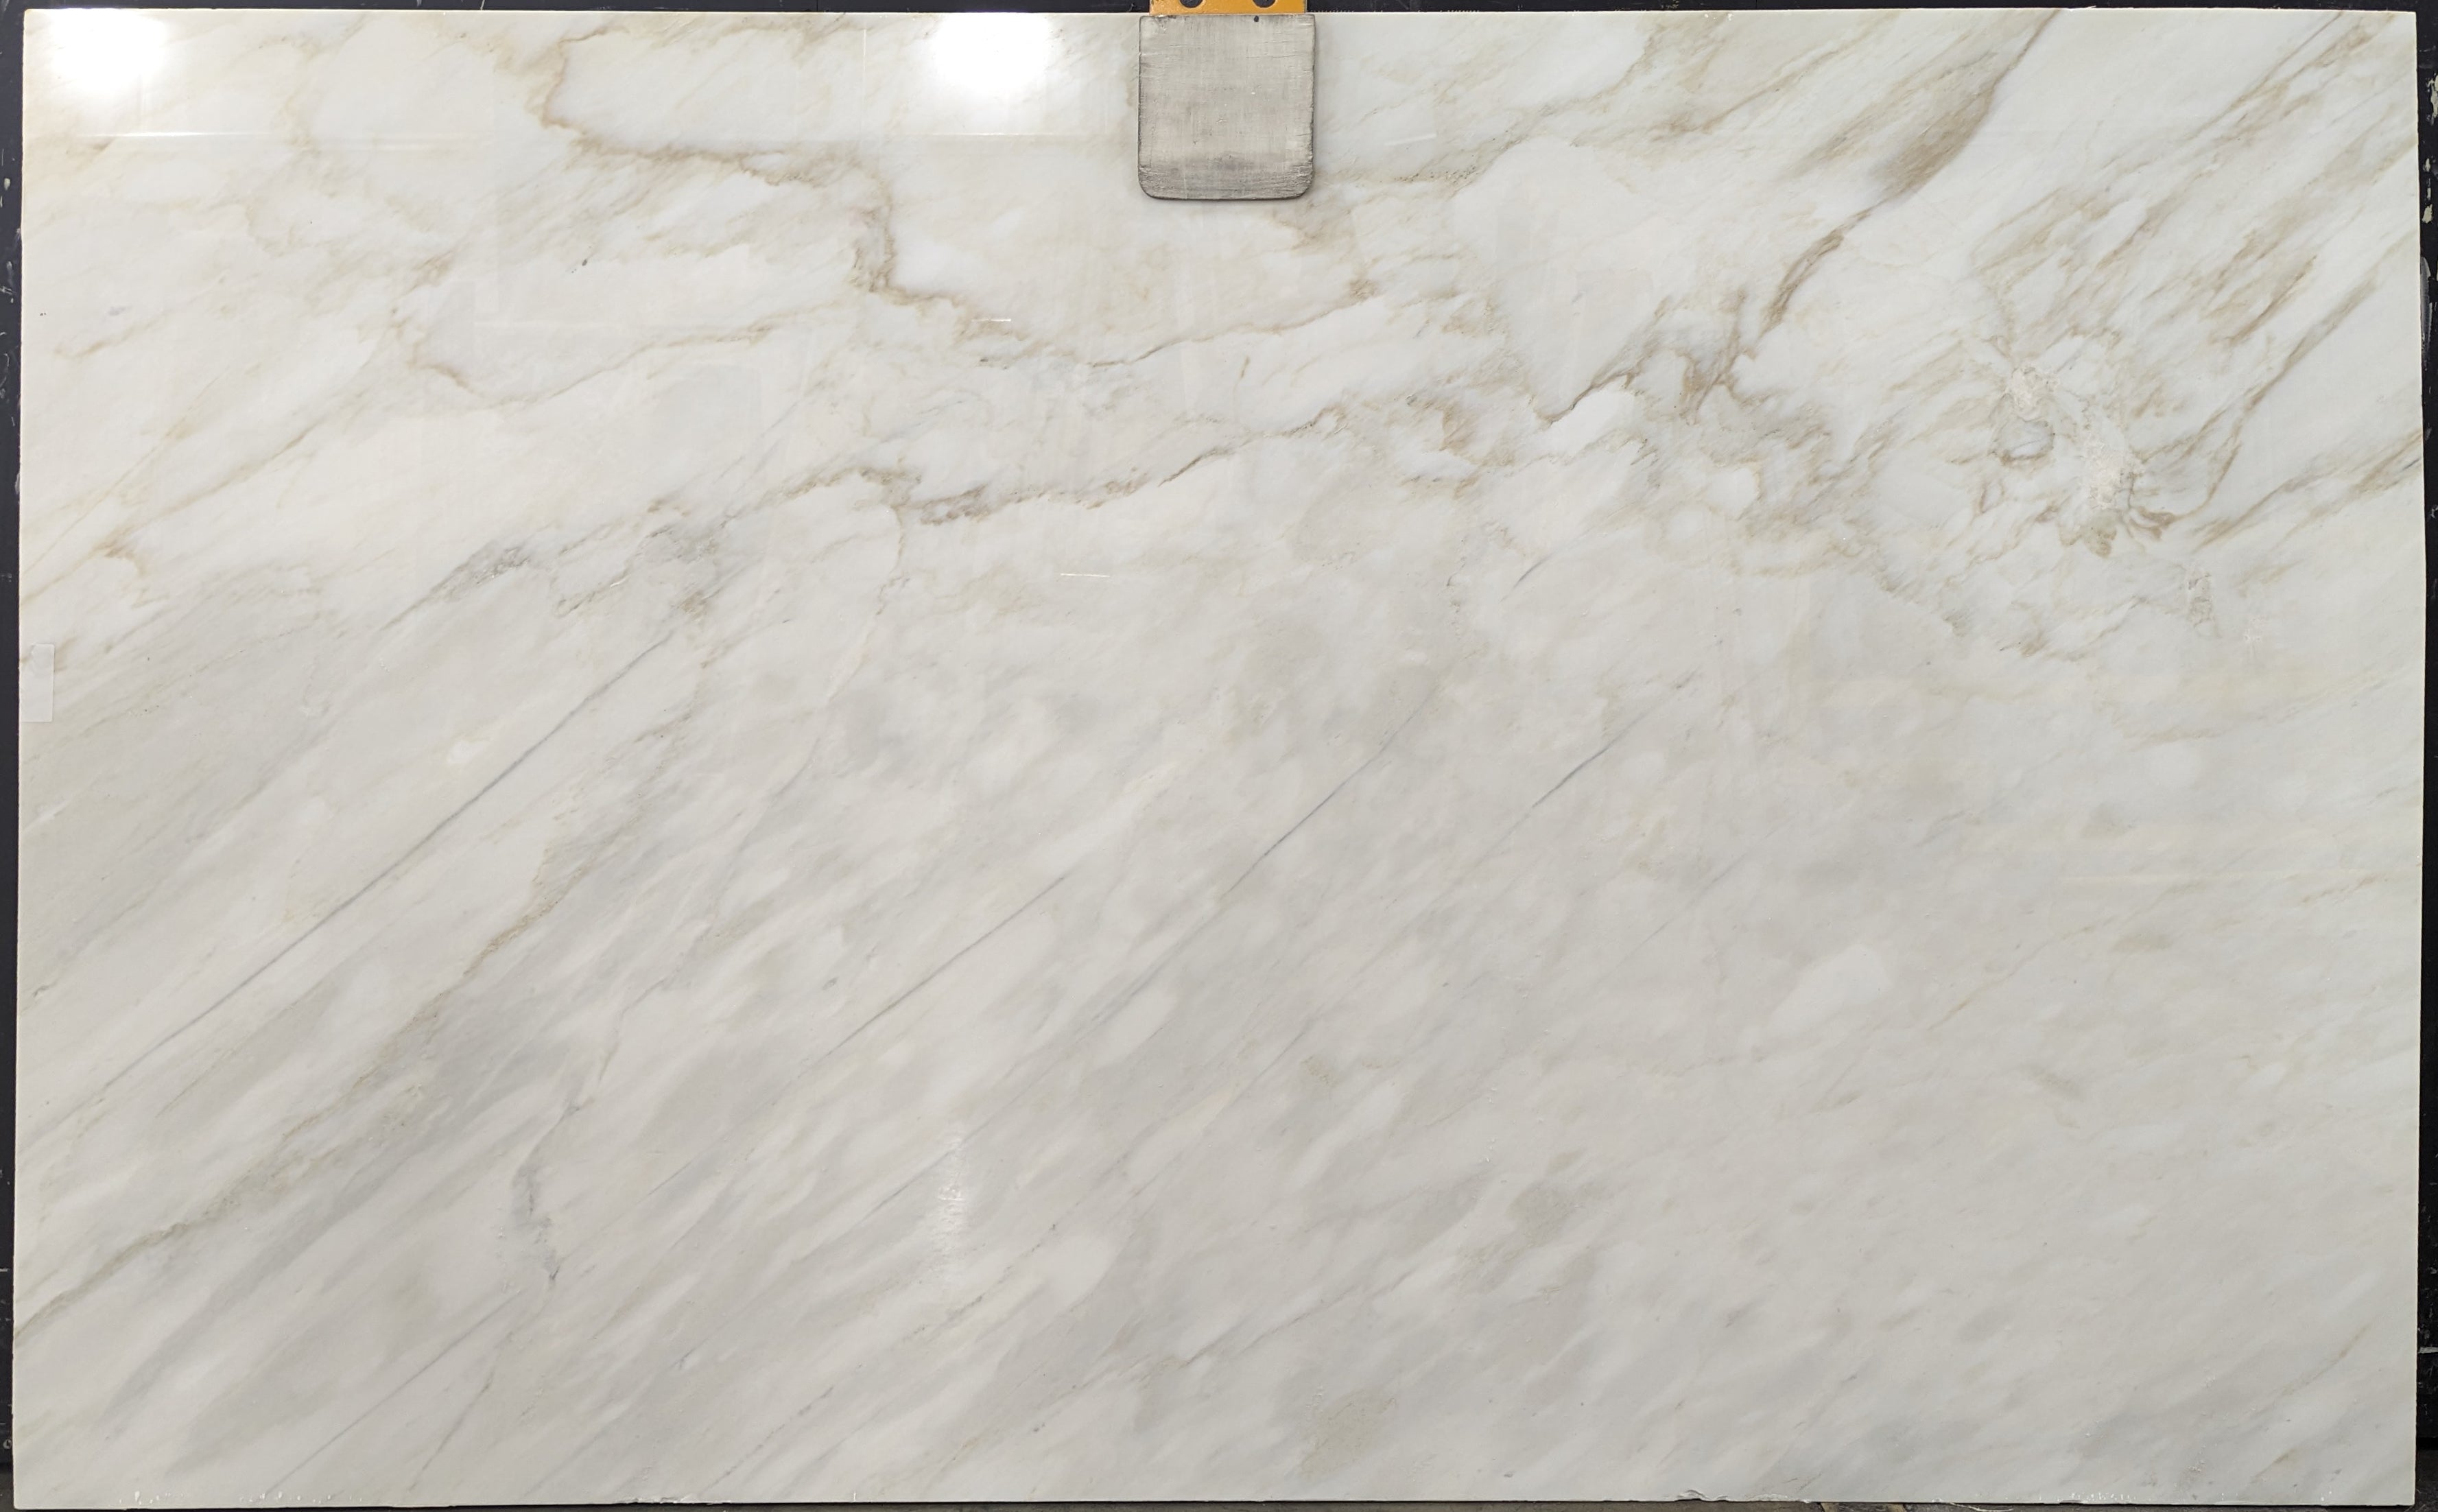  Calacatta Cremo Marble Slab 3/4  Polished Stone - 11726#24 -  69X113 